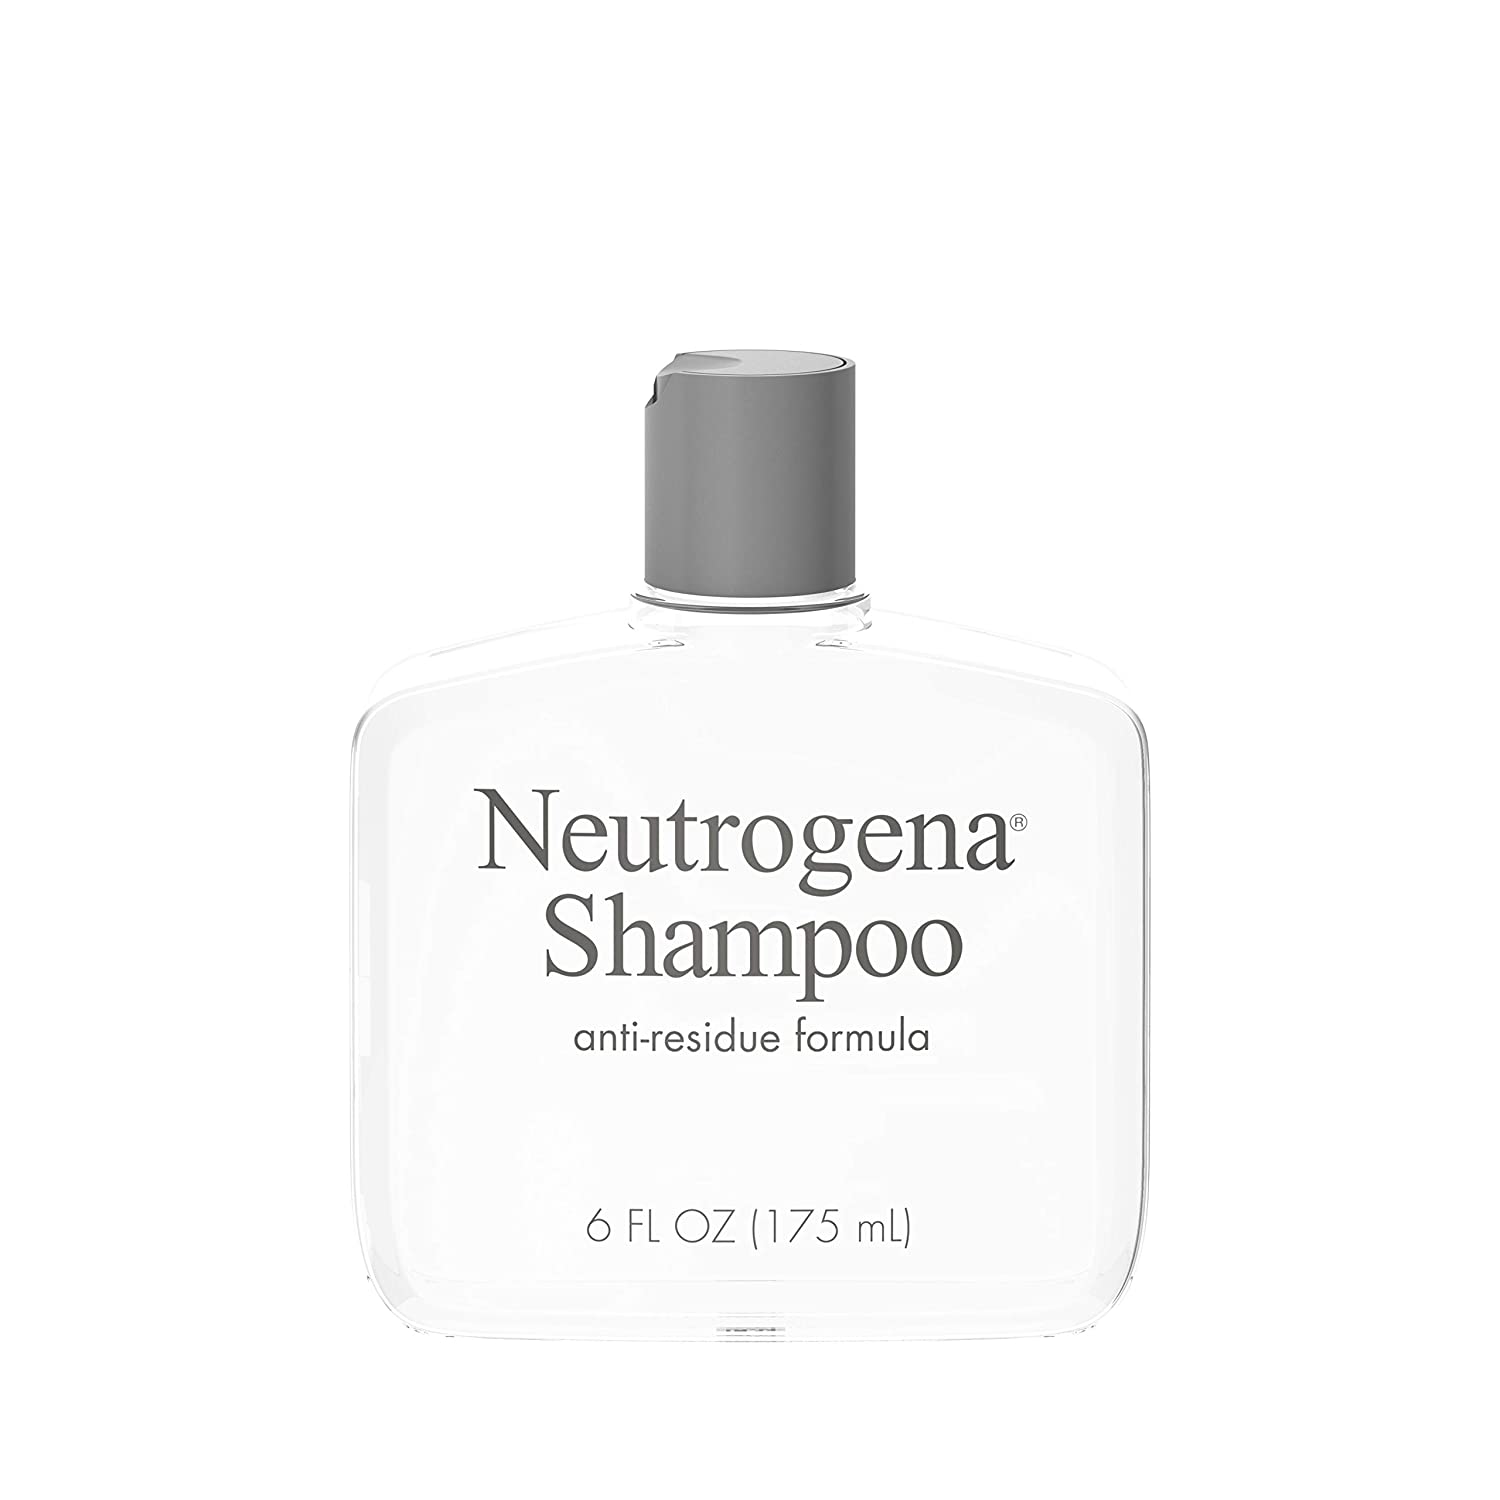  1. Neutrogena Anti-Residue Formula for Oily Hair 